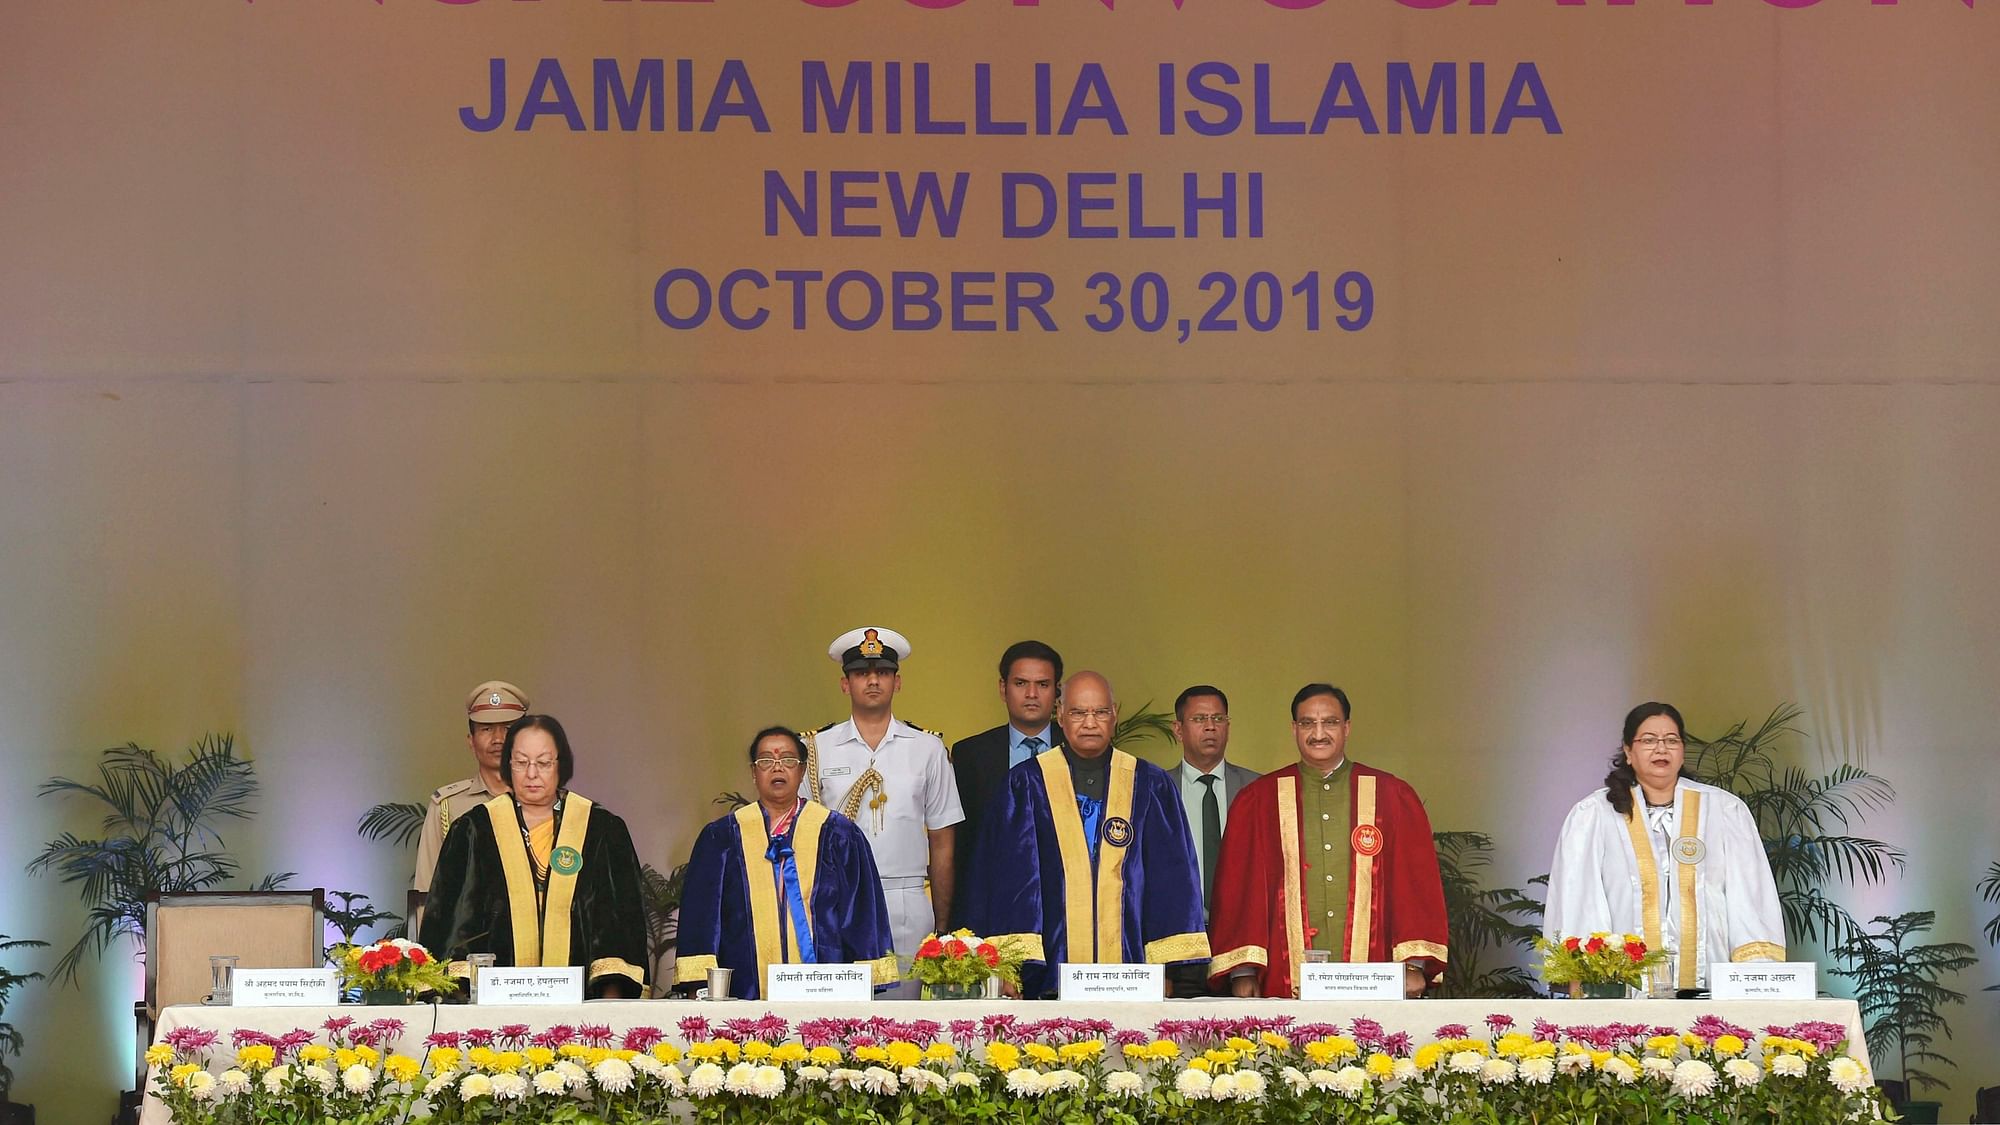 President Ram Nath Kovind, First Lady Savita Kovind, Manipur Governor and JMI Chancellor Najma Heptulla, HRD Minister Ramesh Pokhriyal ‘Nishank’ and JMI V-C Professor Najma Akhtar during Jamia Millia Islamia’s convocation ceremony.